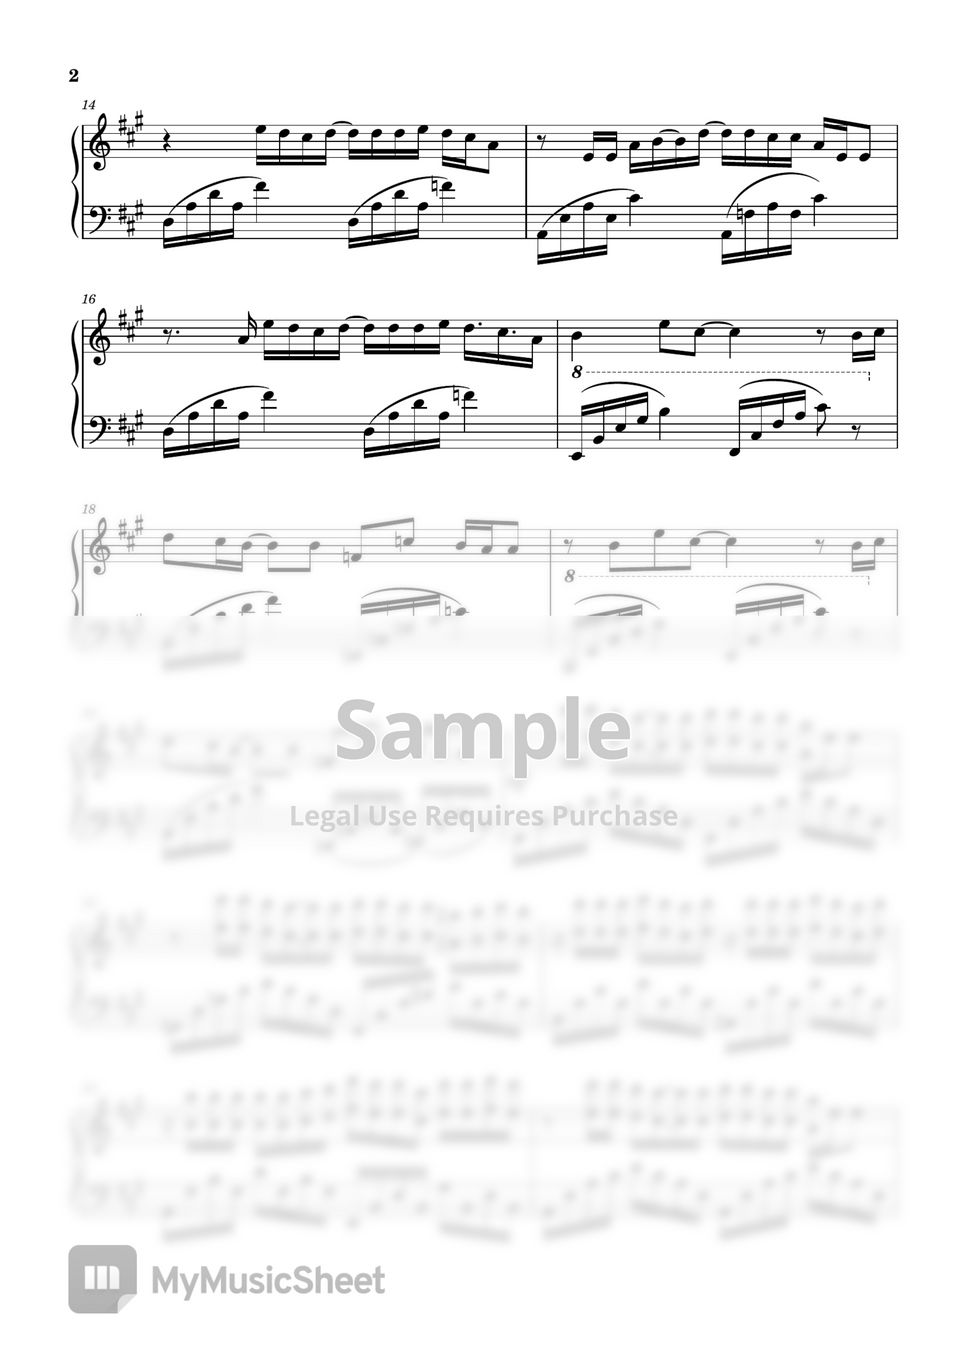 Masayoshi Yamasaki - One more time, One more chance (piano arrangement) by Danny Vizueta